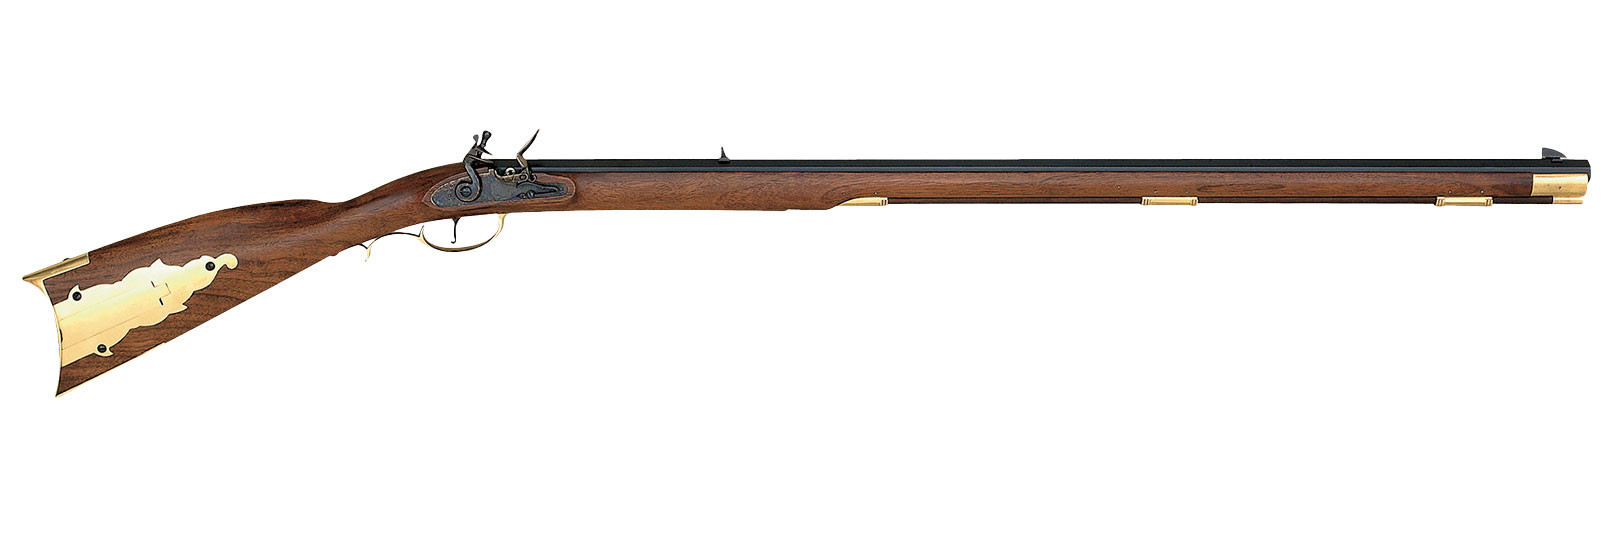 Kentucky Rifle flintlock model